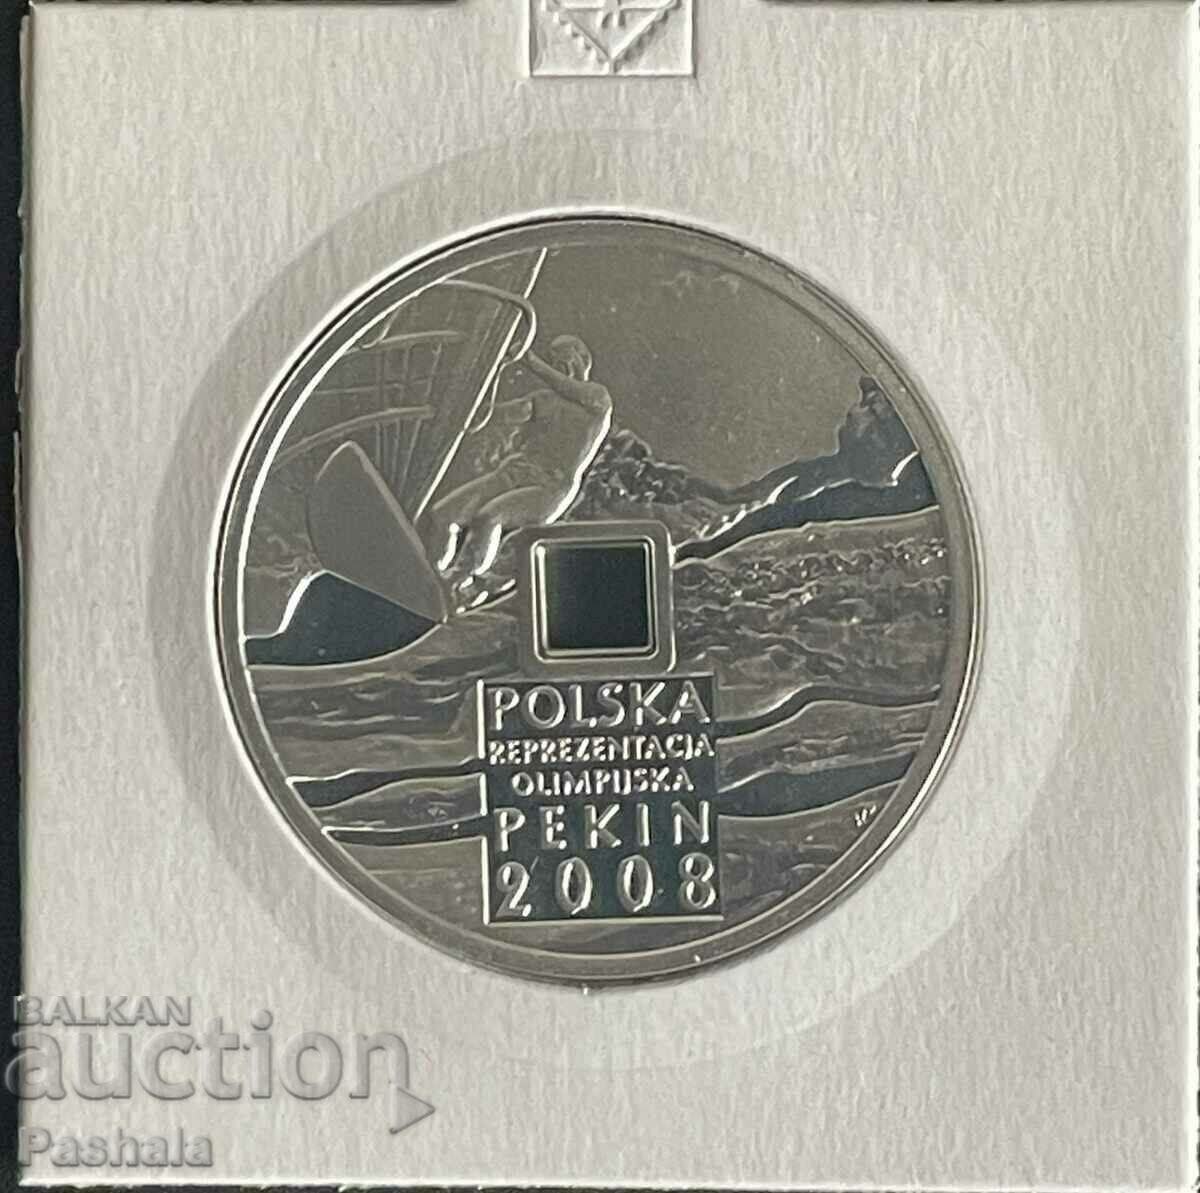 Poland 10 zlotys 2008